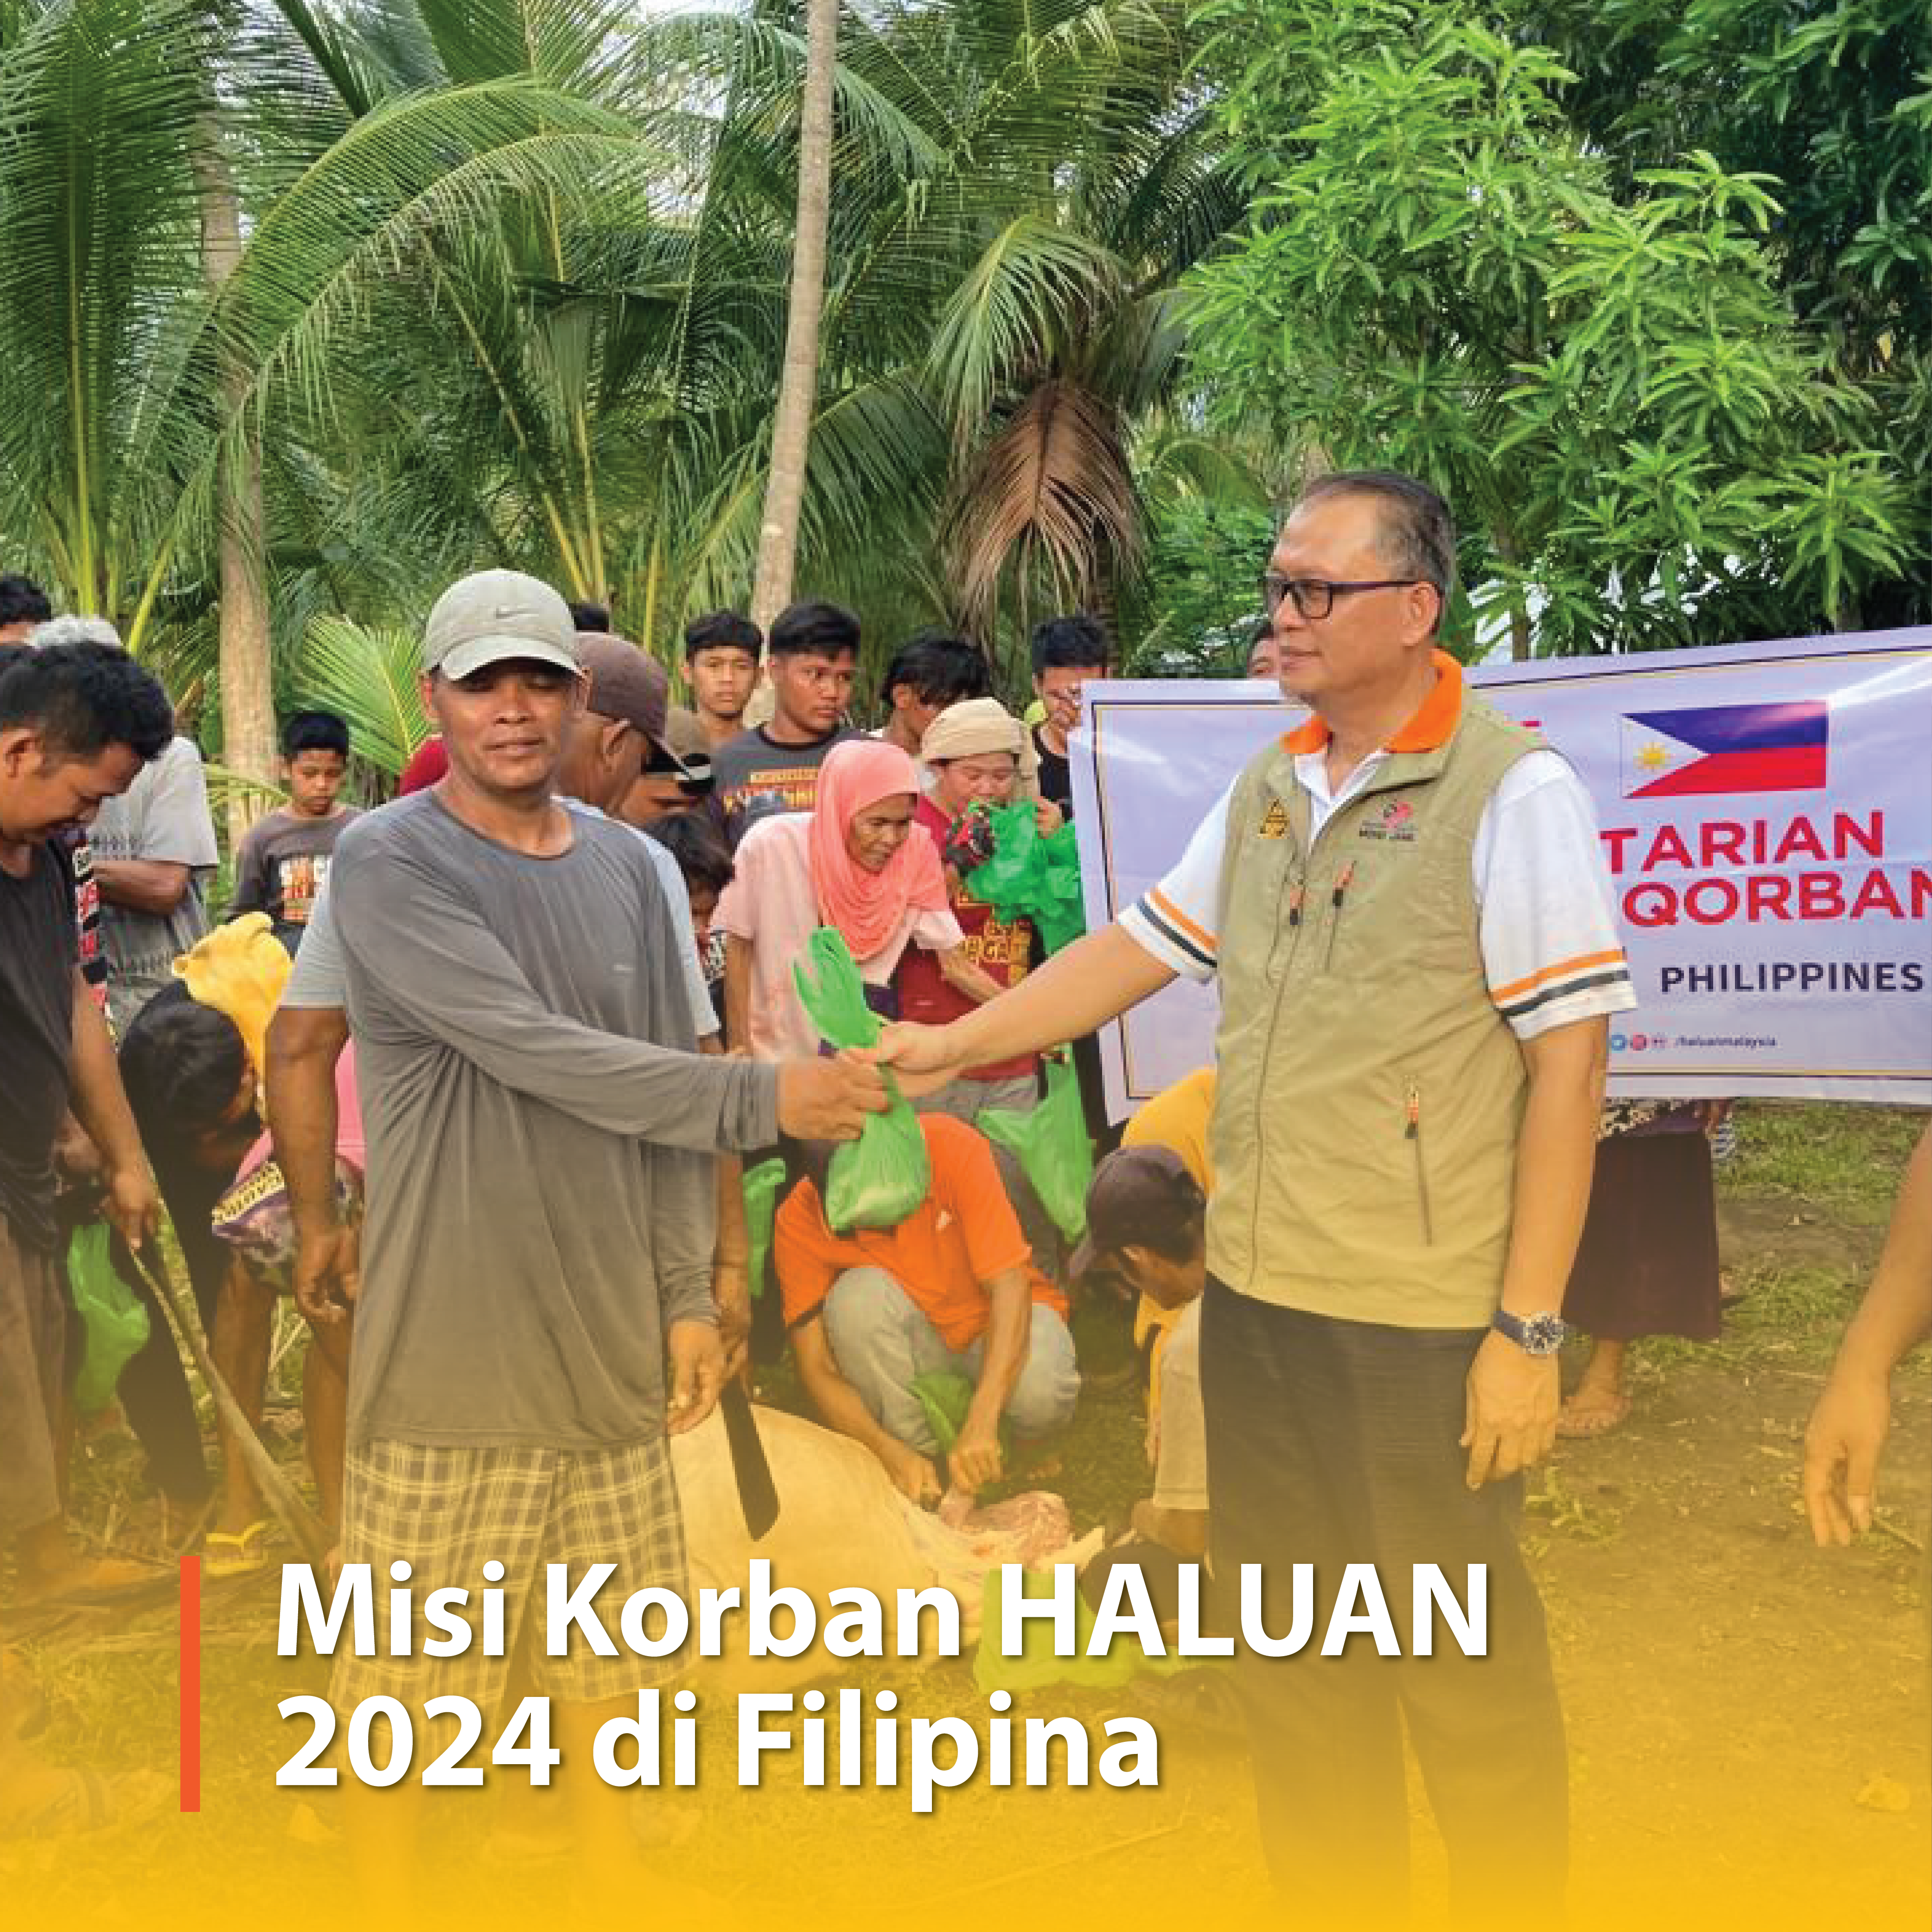 Misi Korban HALUAN 2024 di Filipina